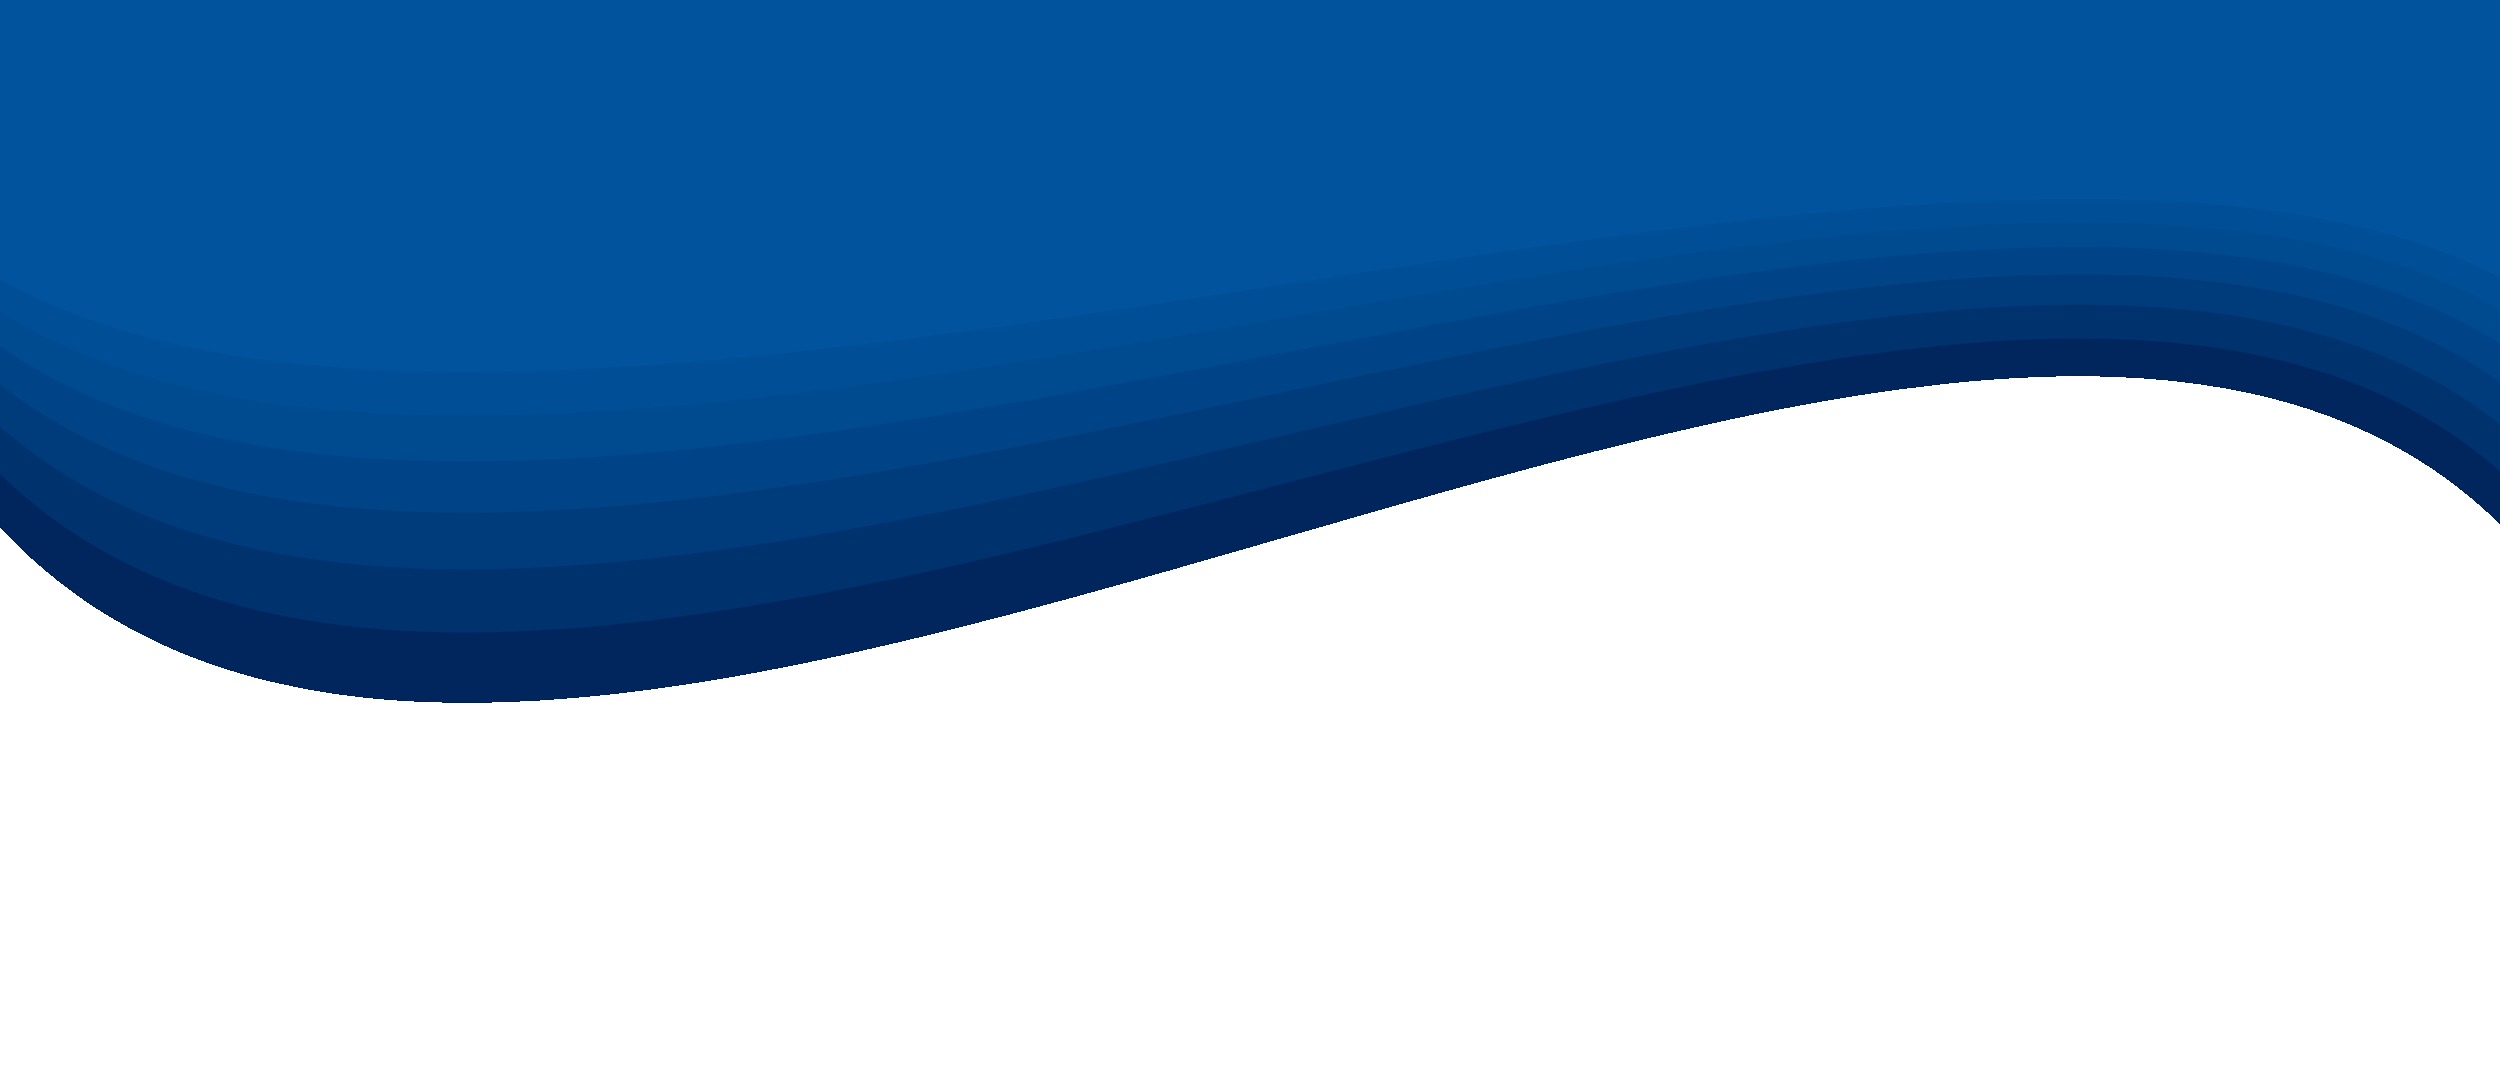 Dark Blue Wave Vector , HD Wallpaper & Backgrounds